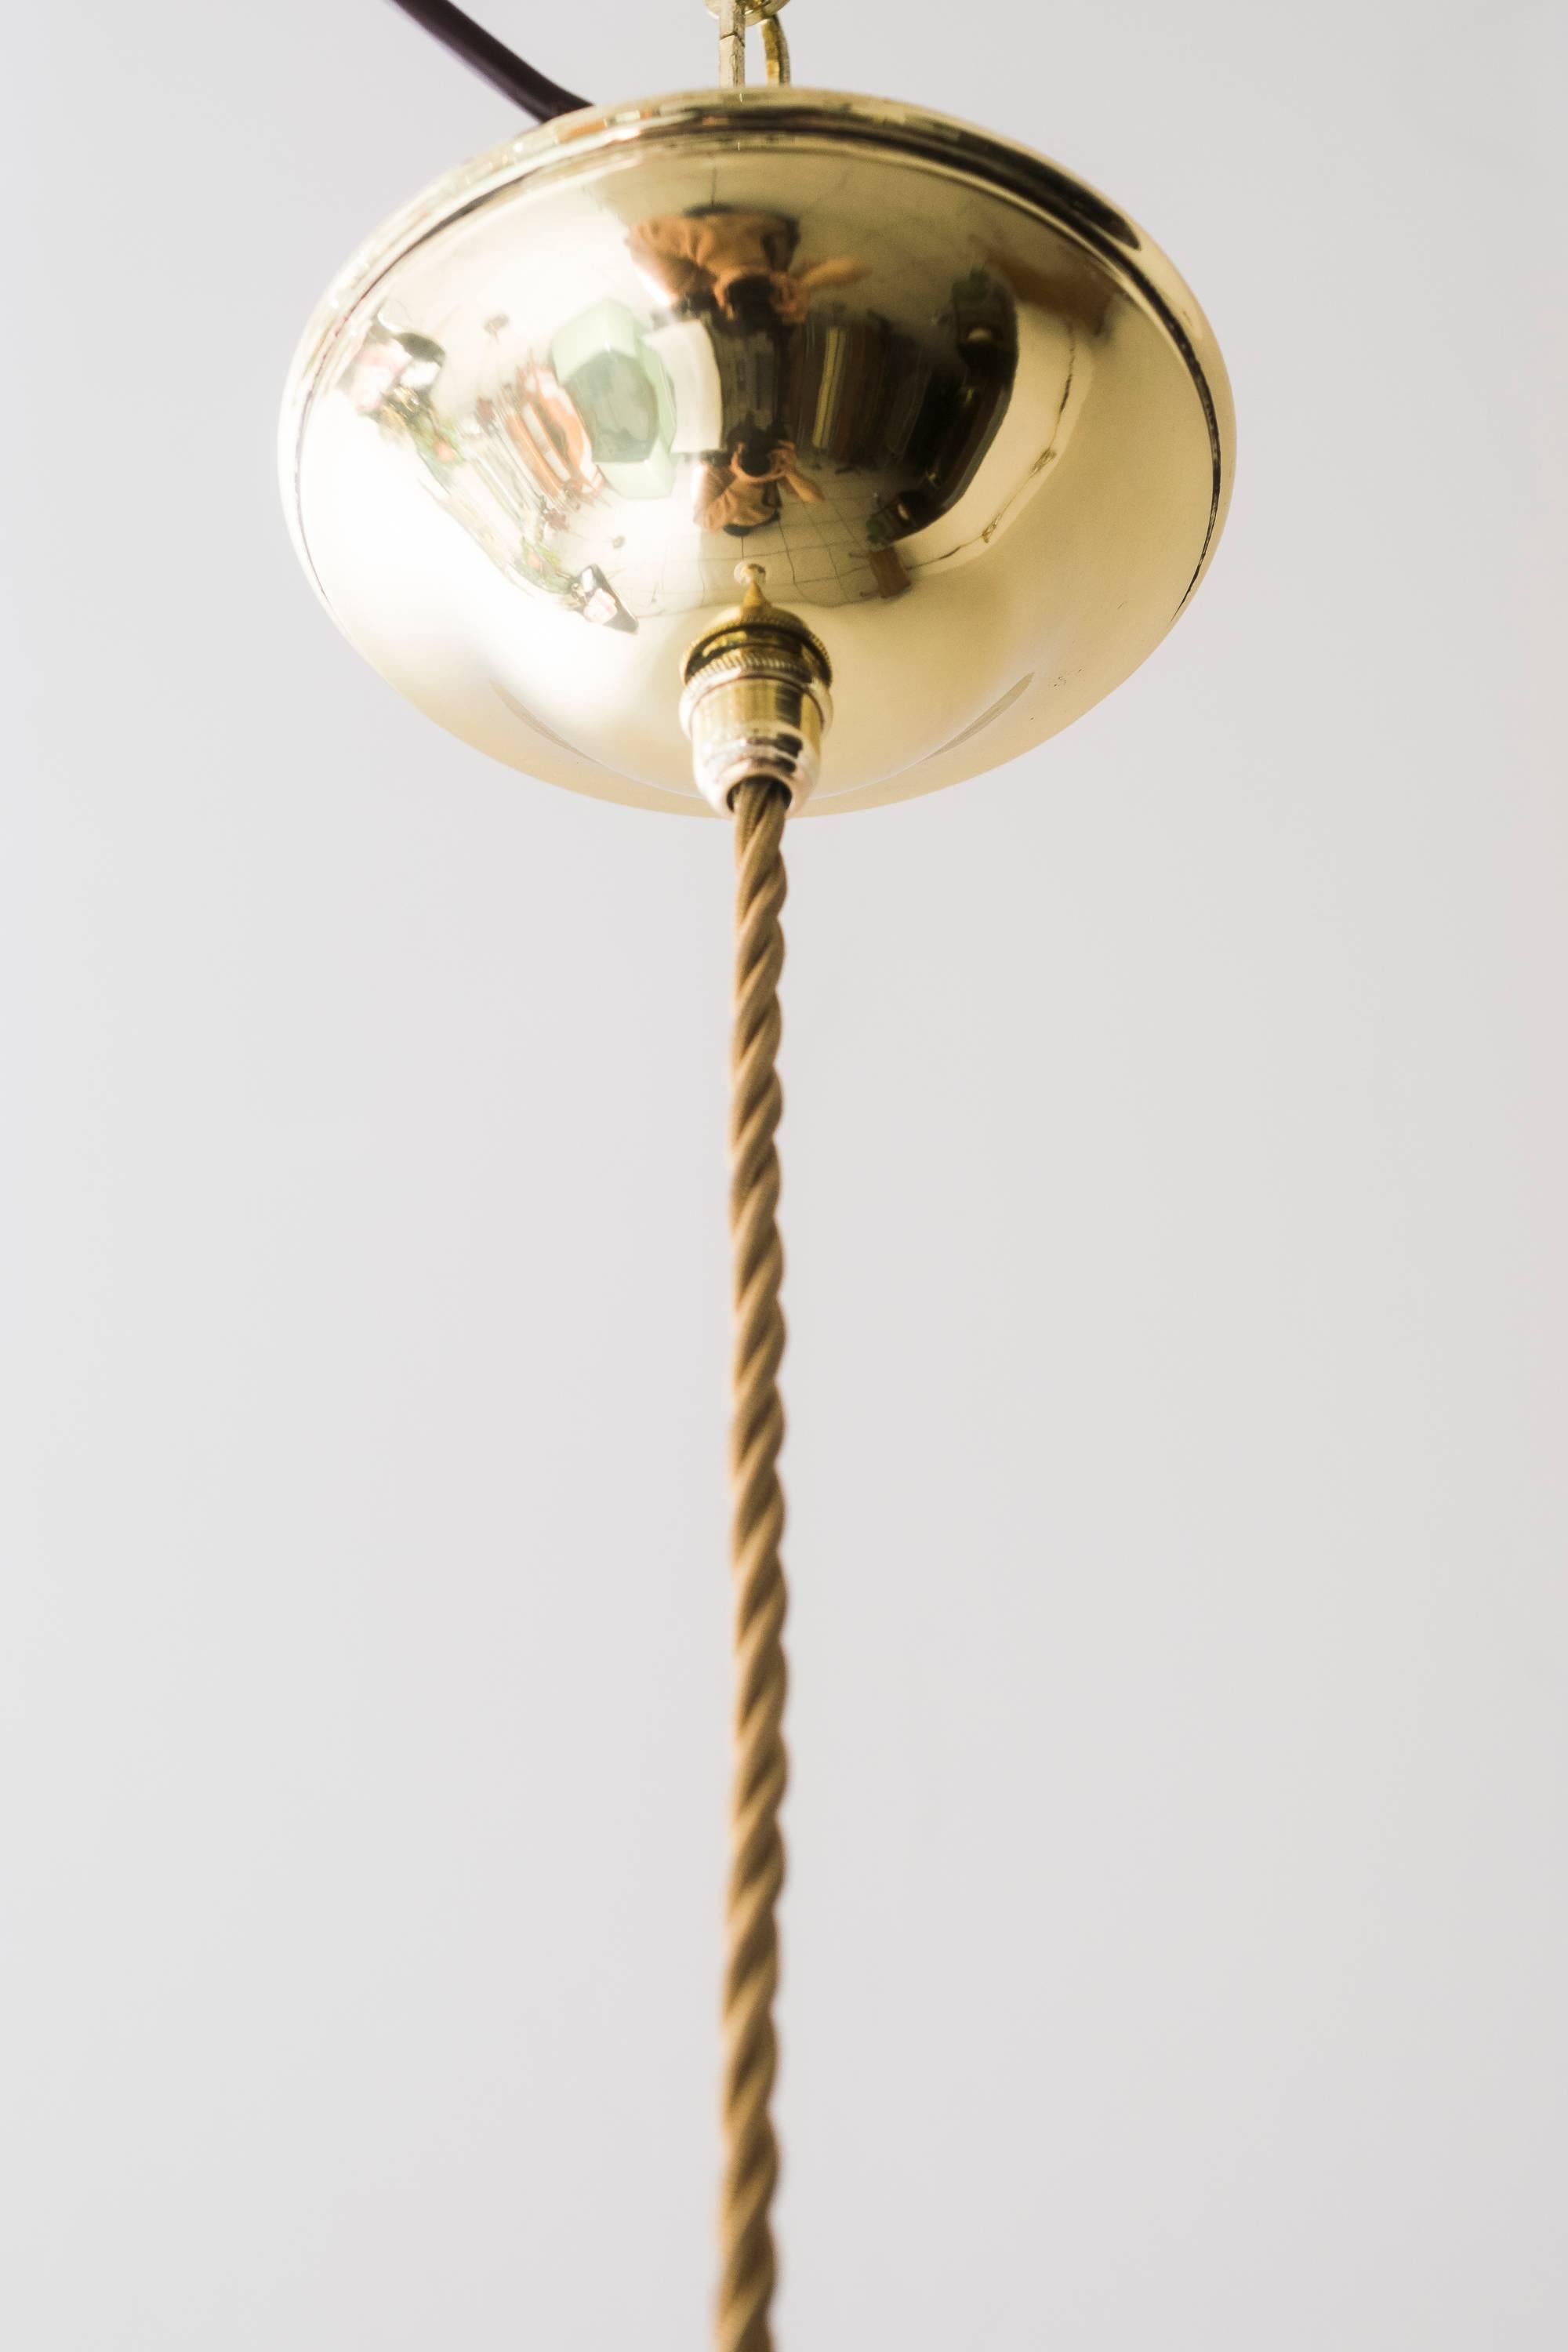 Austrian Viennese Hanging Lamp circa 1905 with Loetz Lamp Shade Koloman Moser For Sale